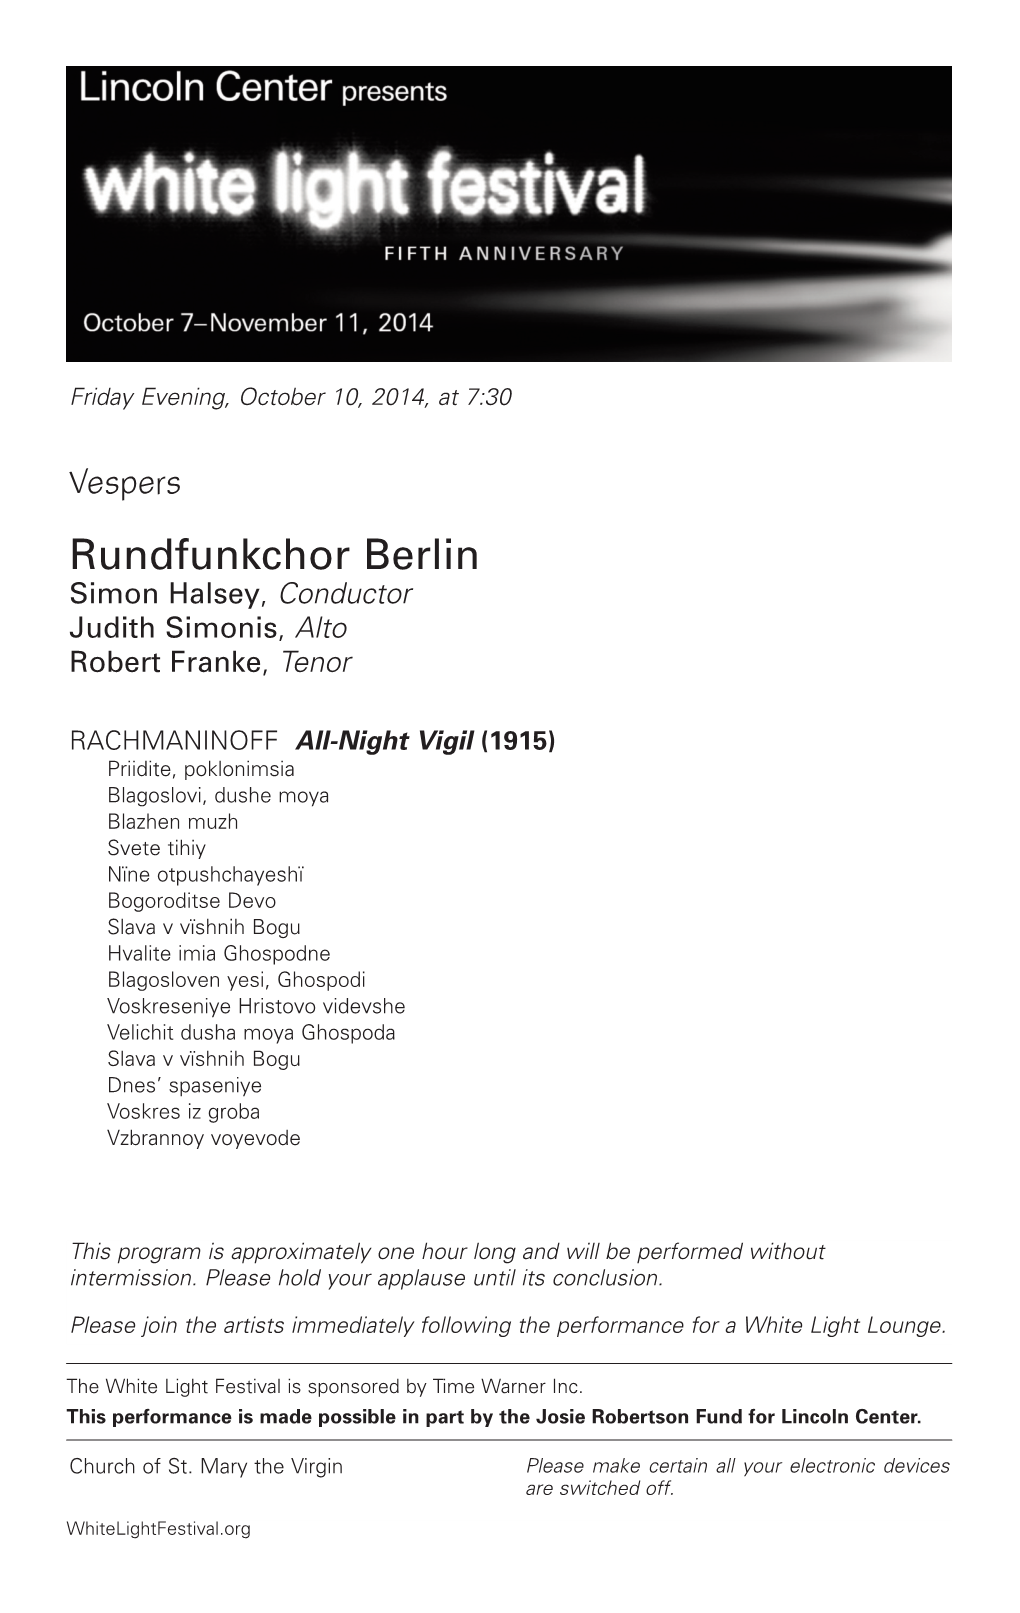 Rundfunkchor Berlin Simon Halsey , Conductor Judith Simonis , Alto Robert Franke , Tenor